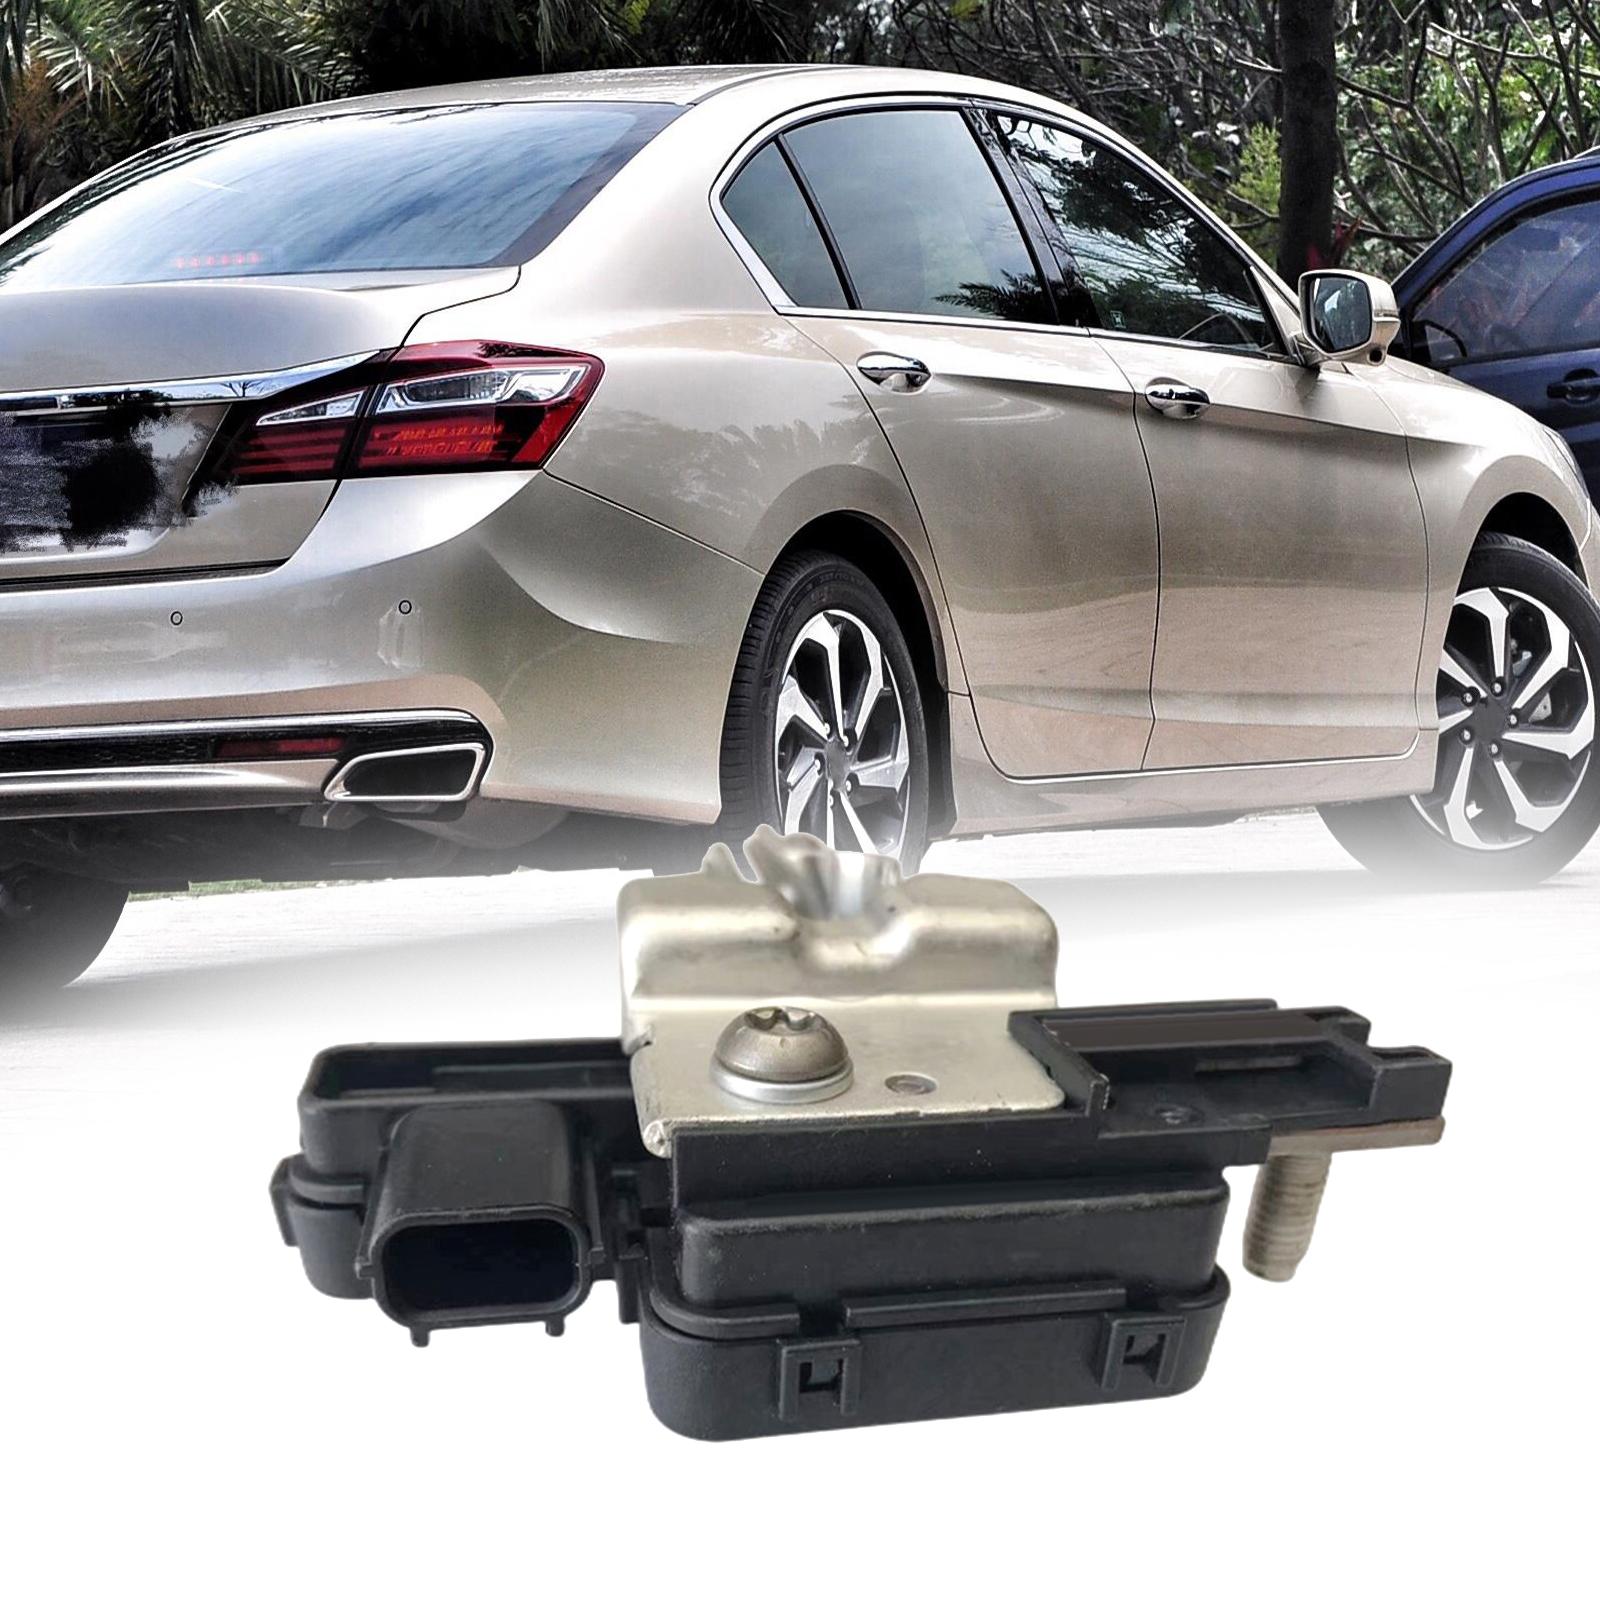 Battery Sensor Current Sensor Vehicle Accessory for Acura Rlx 2014-2017